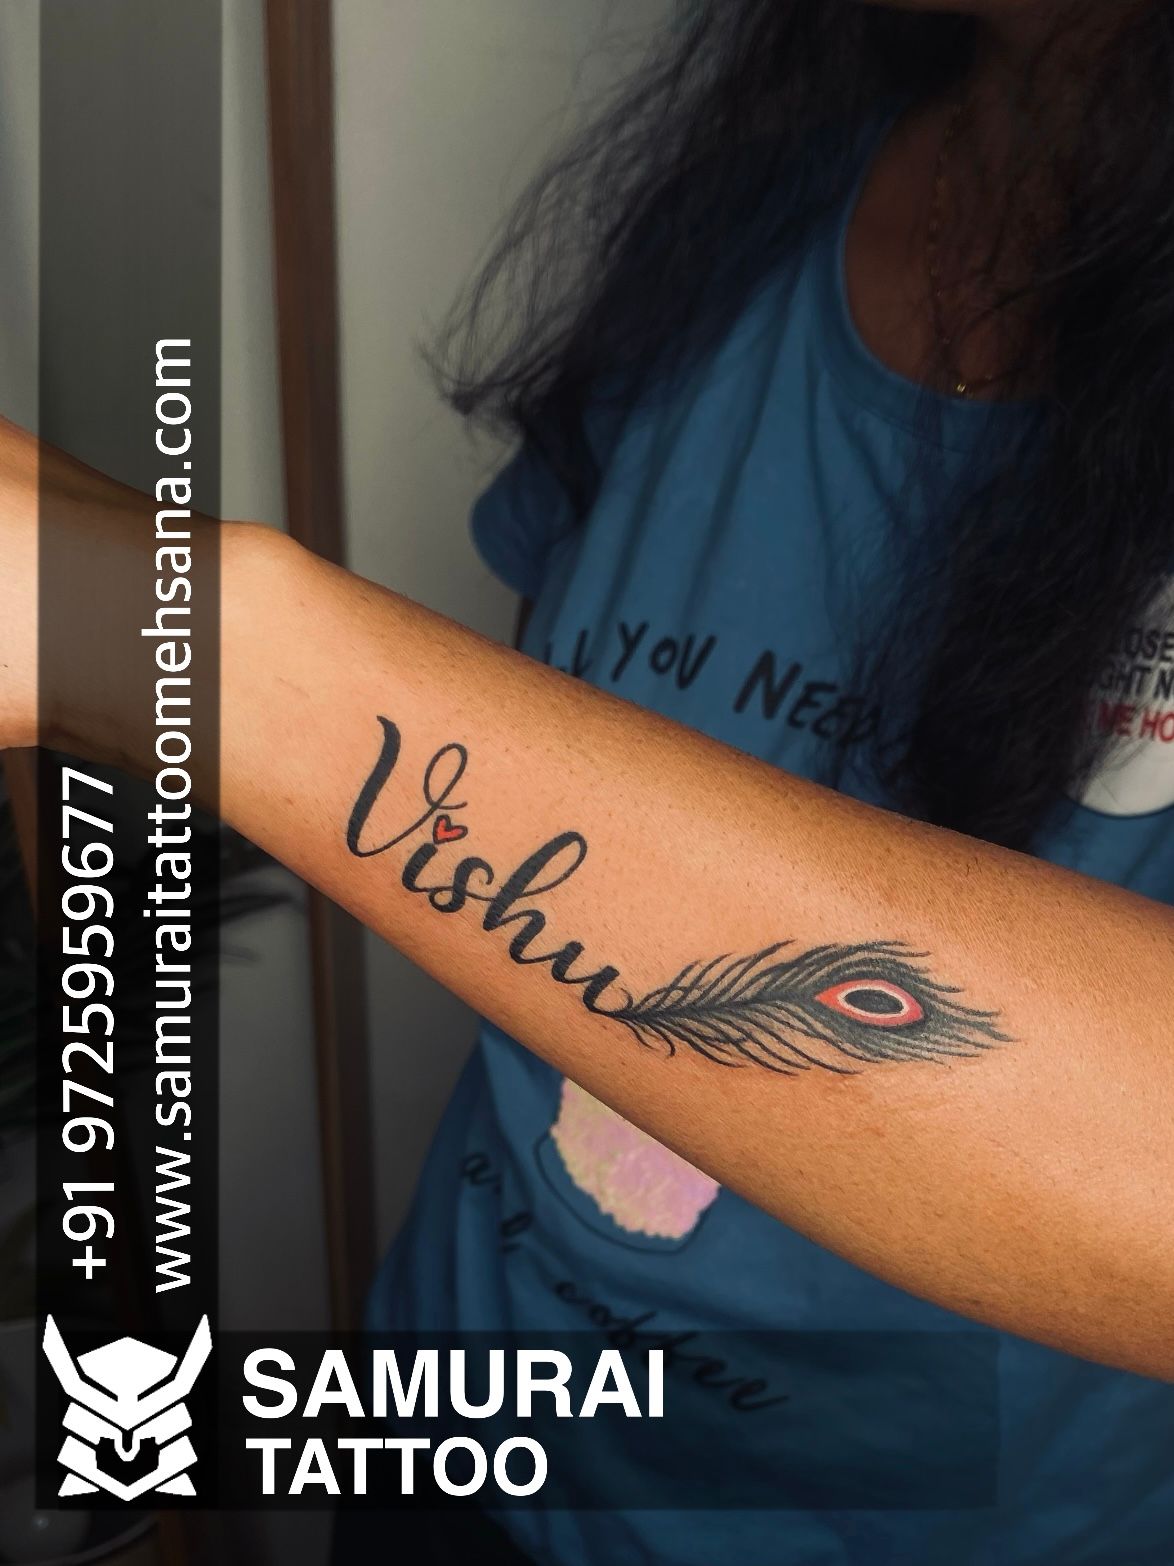 Tattoo uploaded by Vipul Chaudhary • Ajay tattoo |Ajay name tattoo design  |Ajay name tattoo • Tattoodo